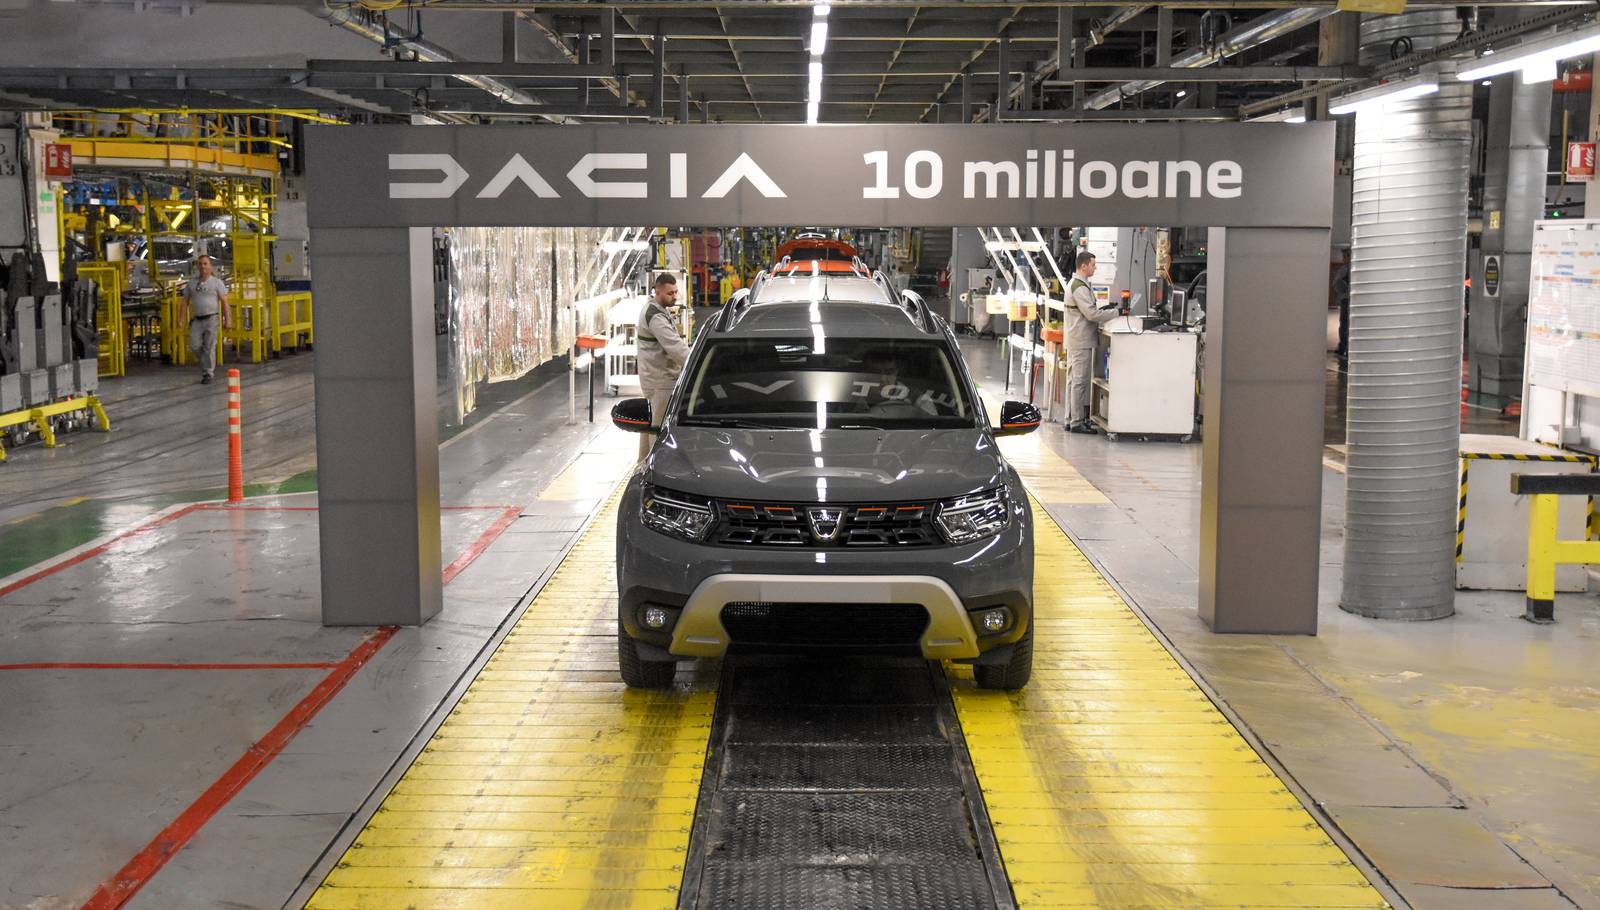 Dacia production